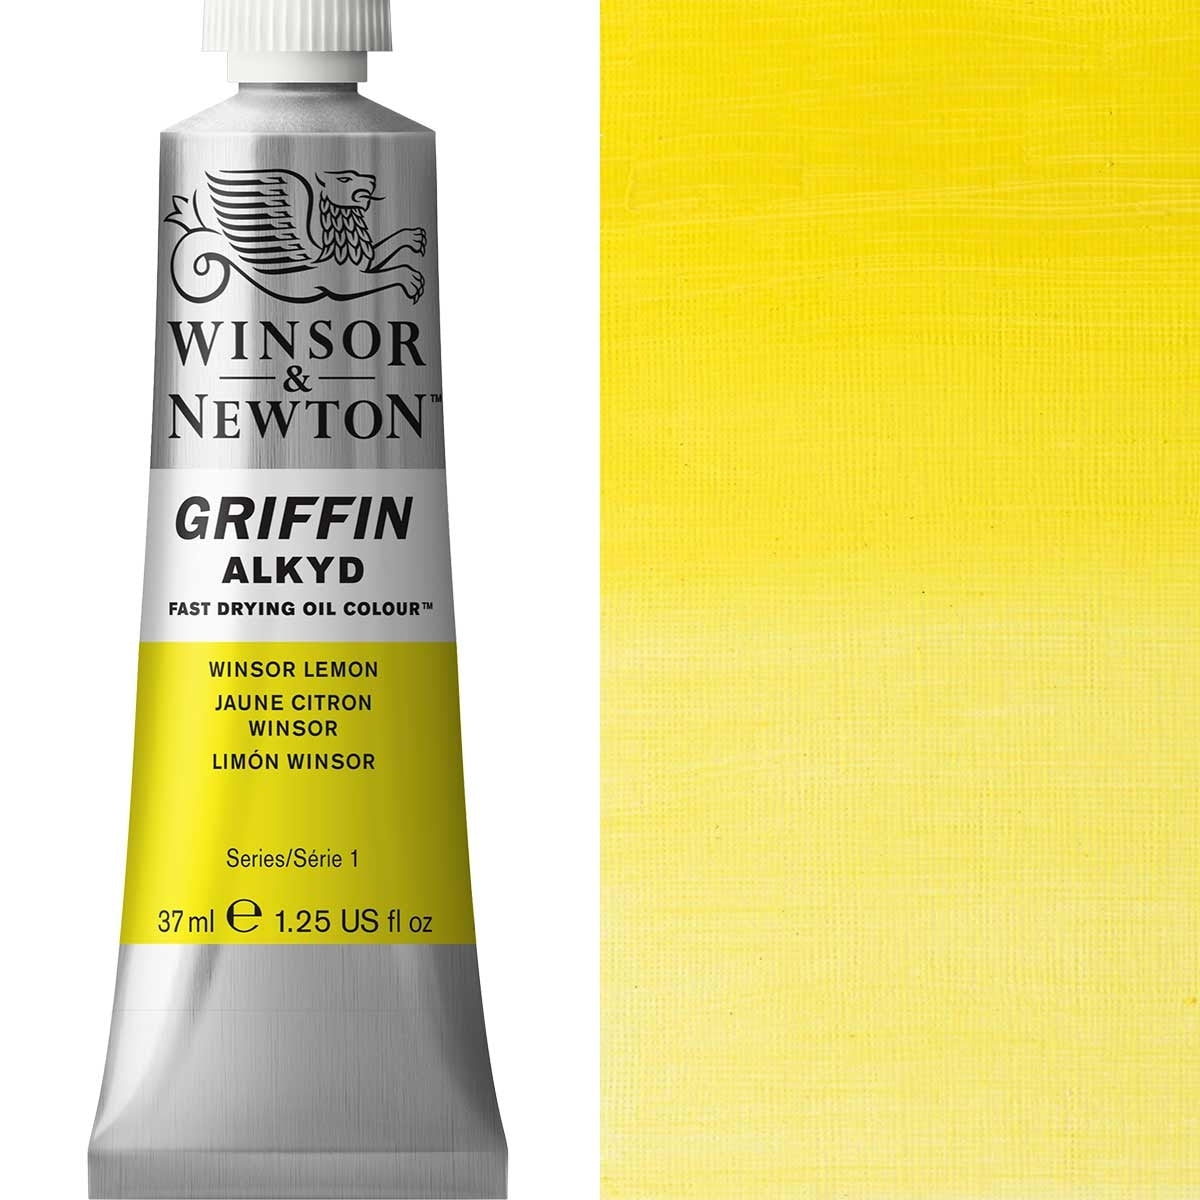 Winsor et Newton - Griffin Alkyd Oil Color - 37ml - Winsor Lemon